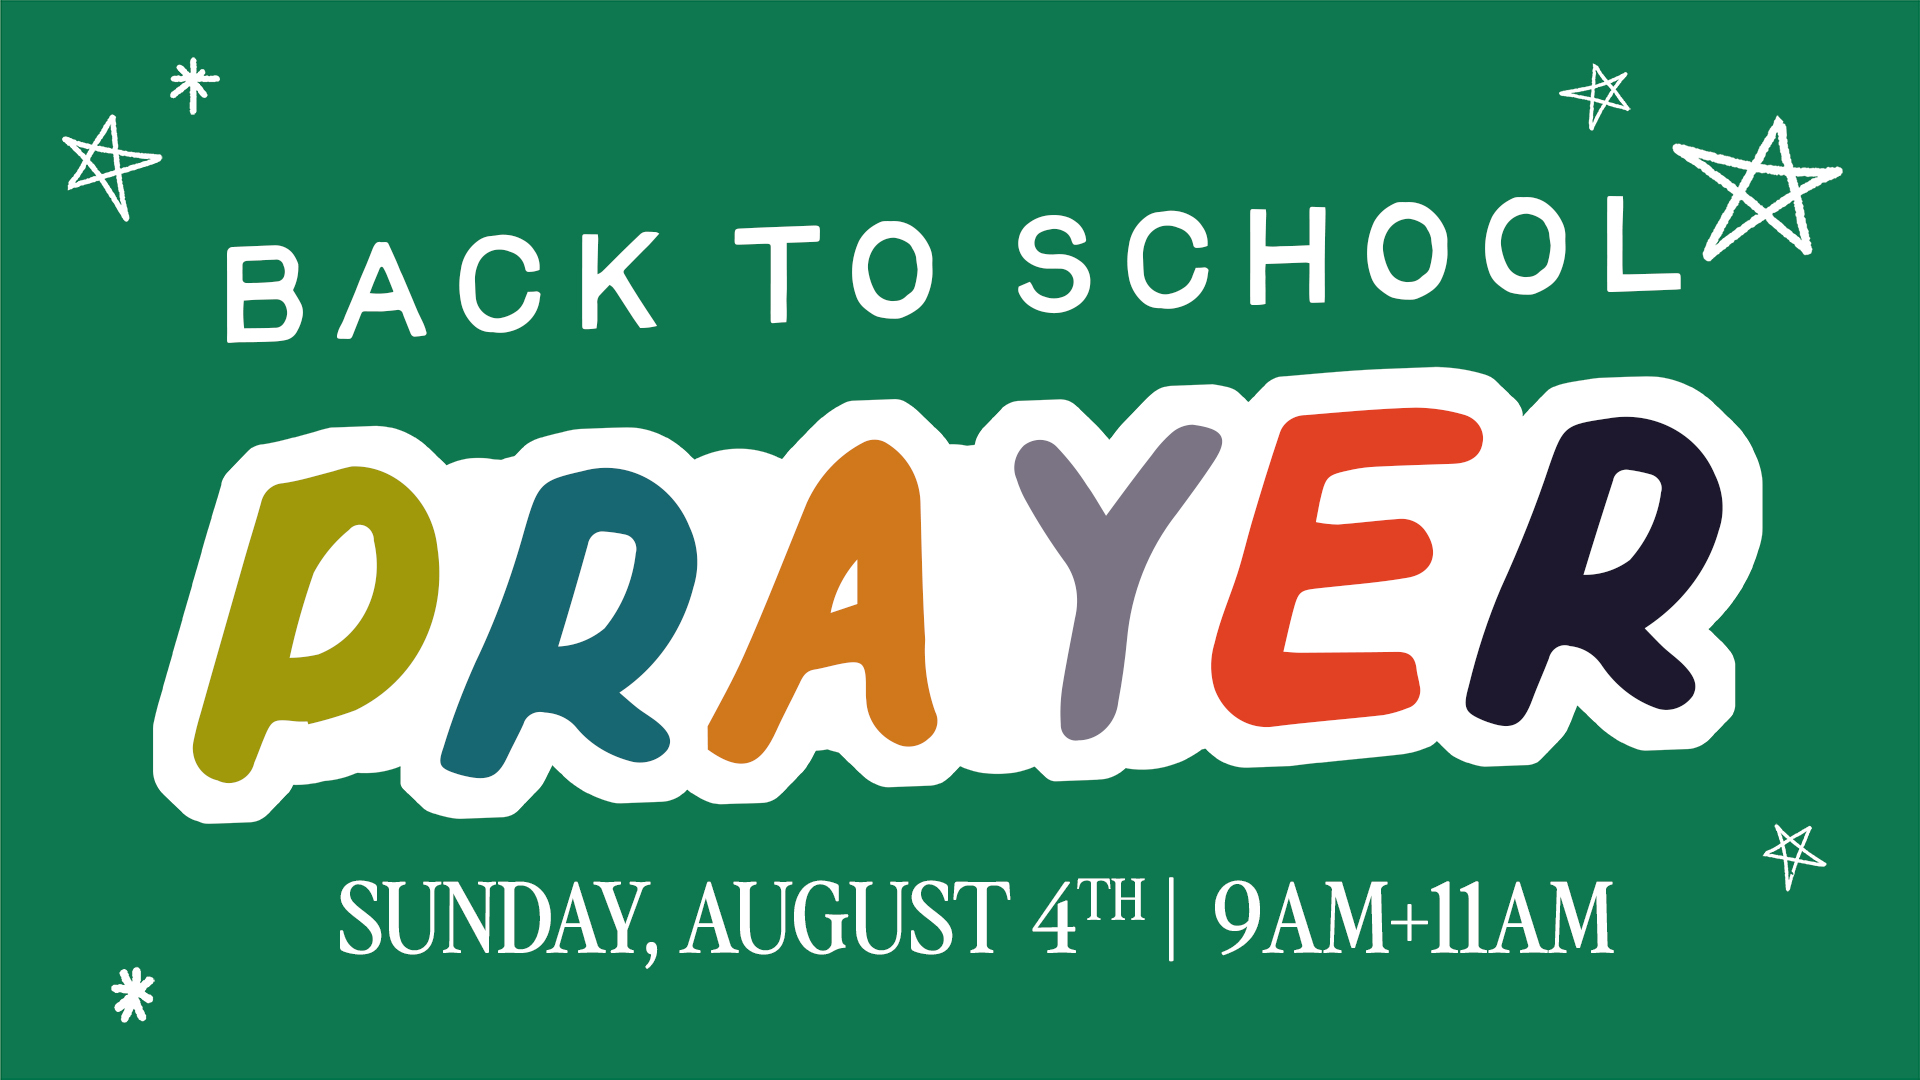 Back to School Prayer at the Gwinnett campus